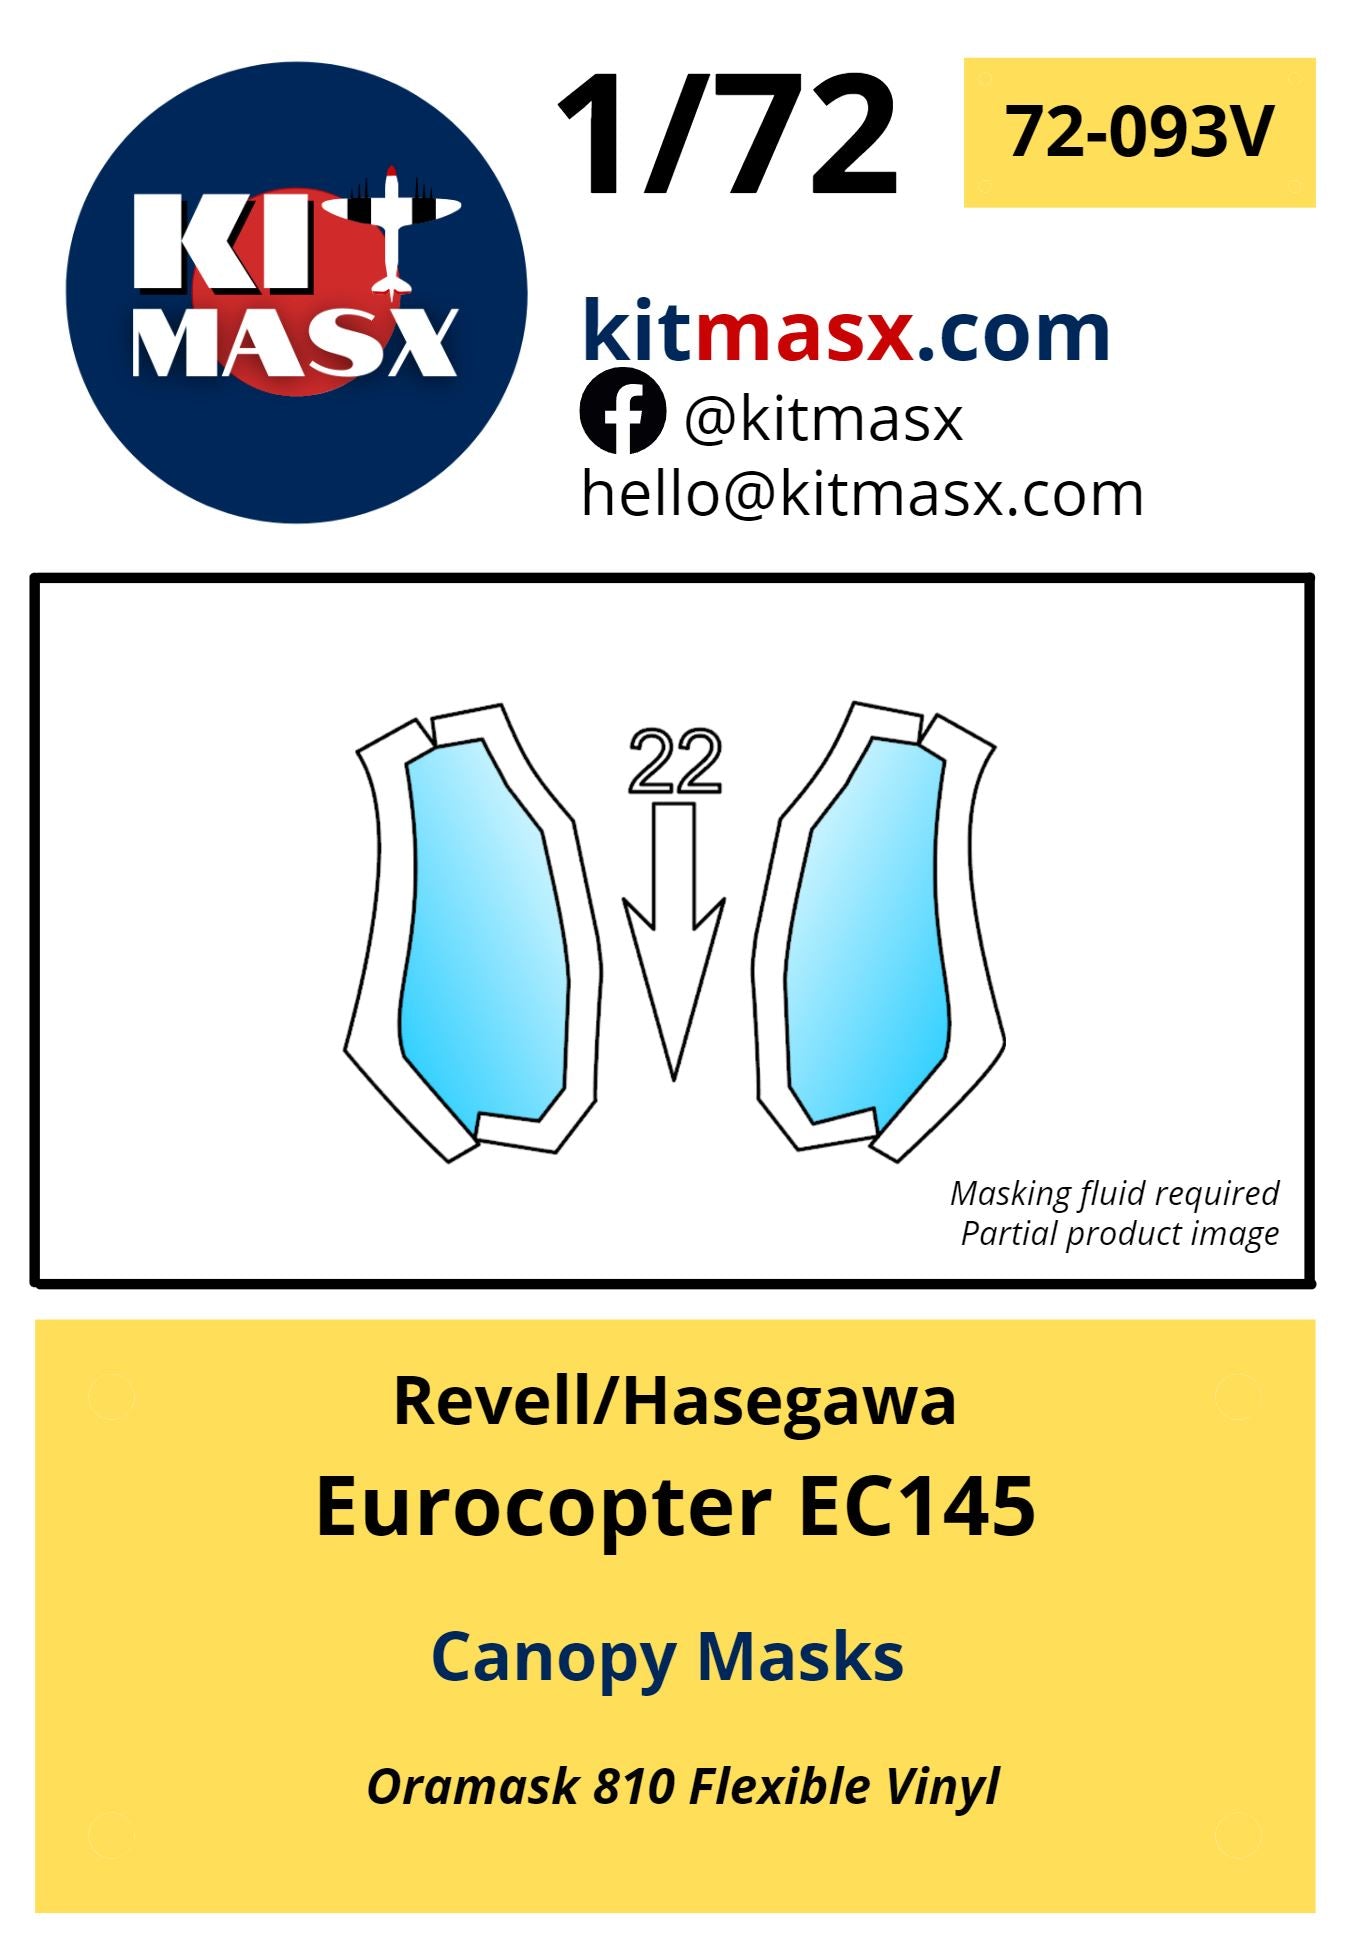 Revell/Hasegawa Eurocopter EC145 Canopy Masks Kit Masx 